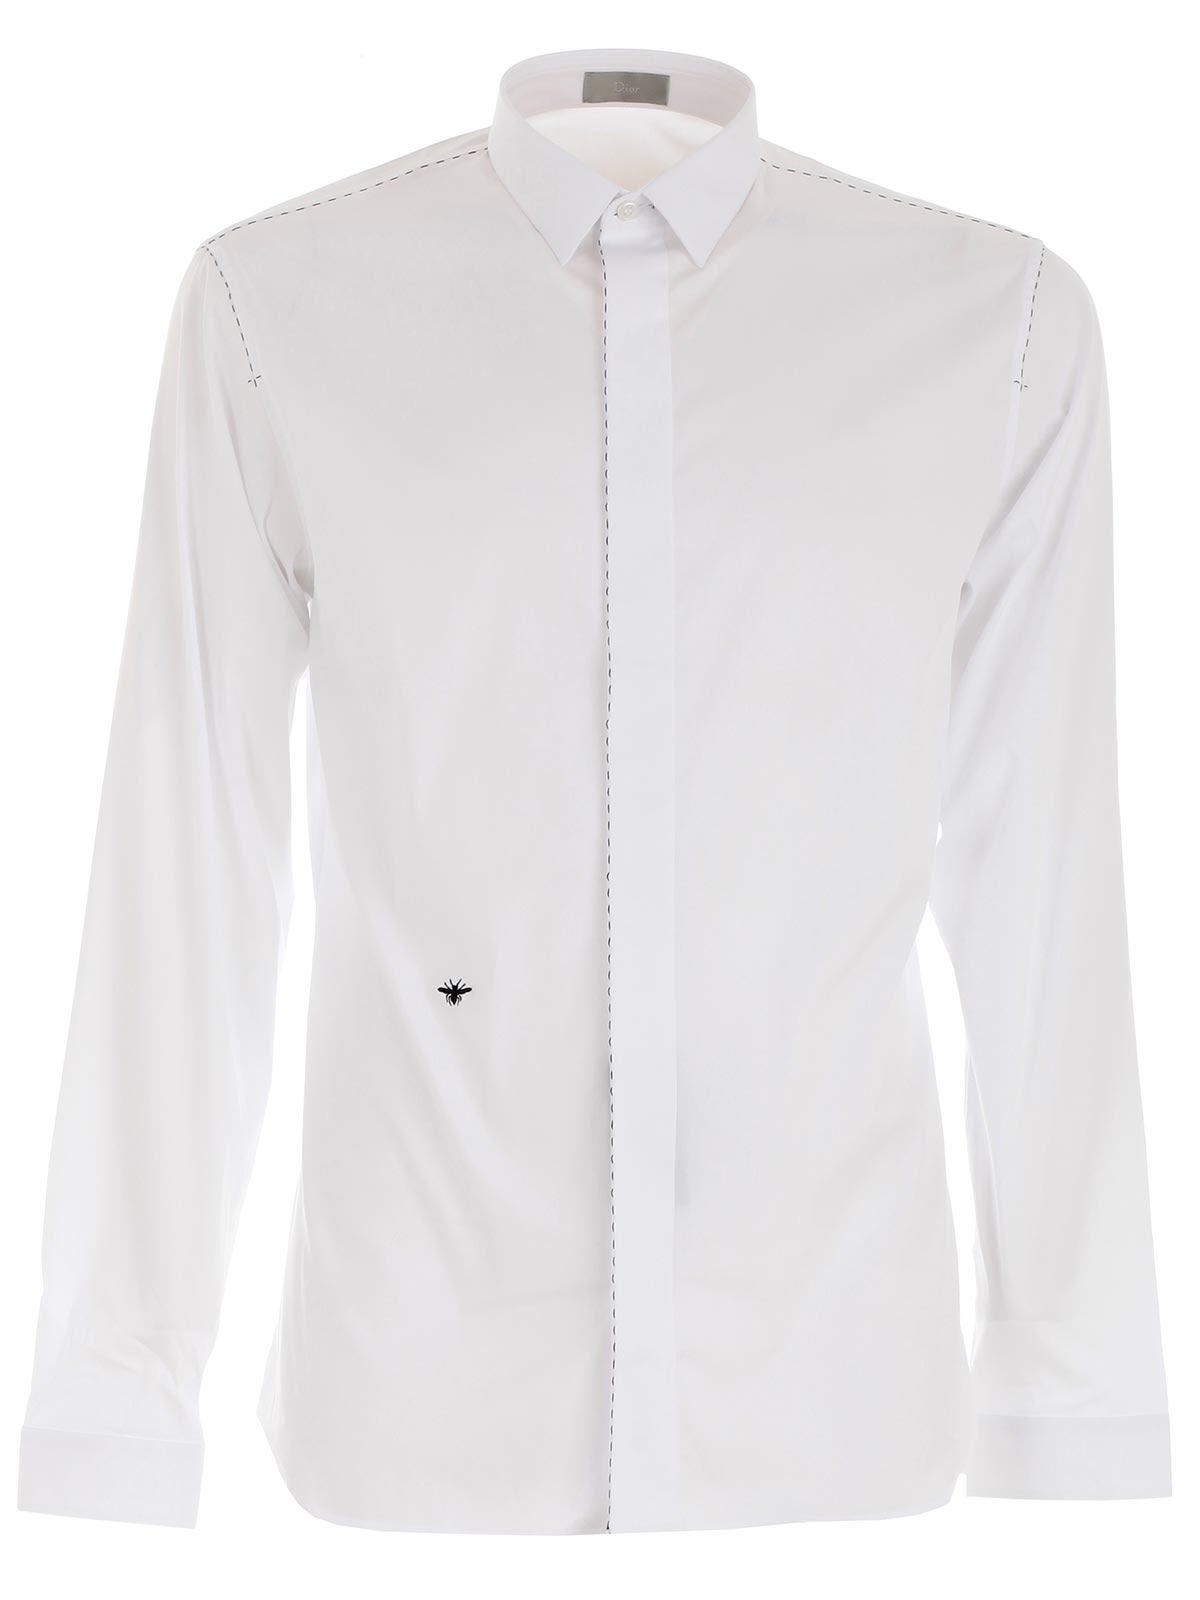 Dior Homme - Dior Homme Shirt - Whim White, Men's Shirts | Italist